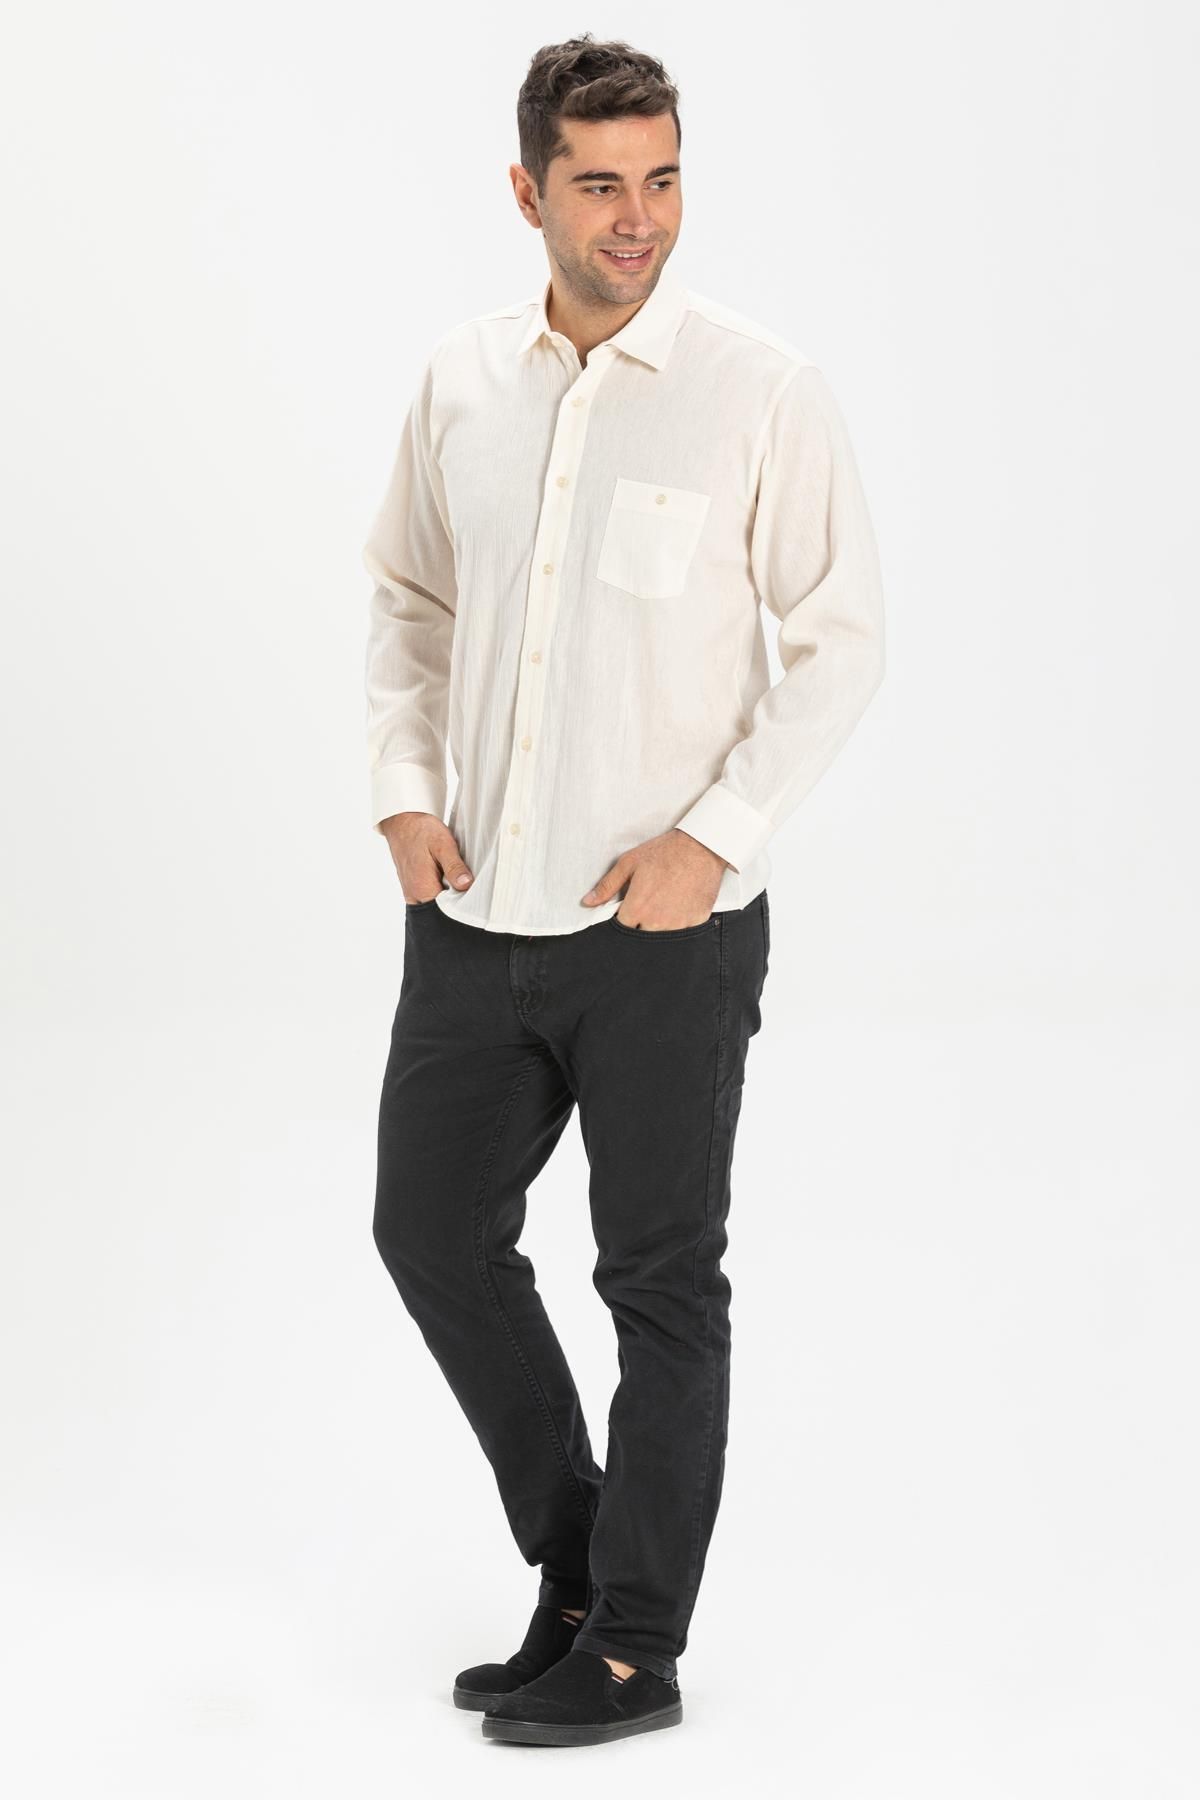 Eliş Şile Bezi کرم پیراهن مردانه آستین بلند تک جیب شیله پارچه ای سایز بزرگ 3002